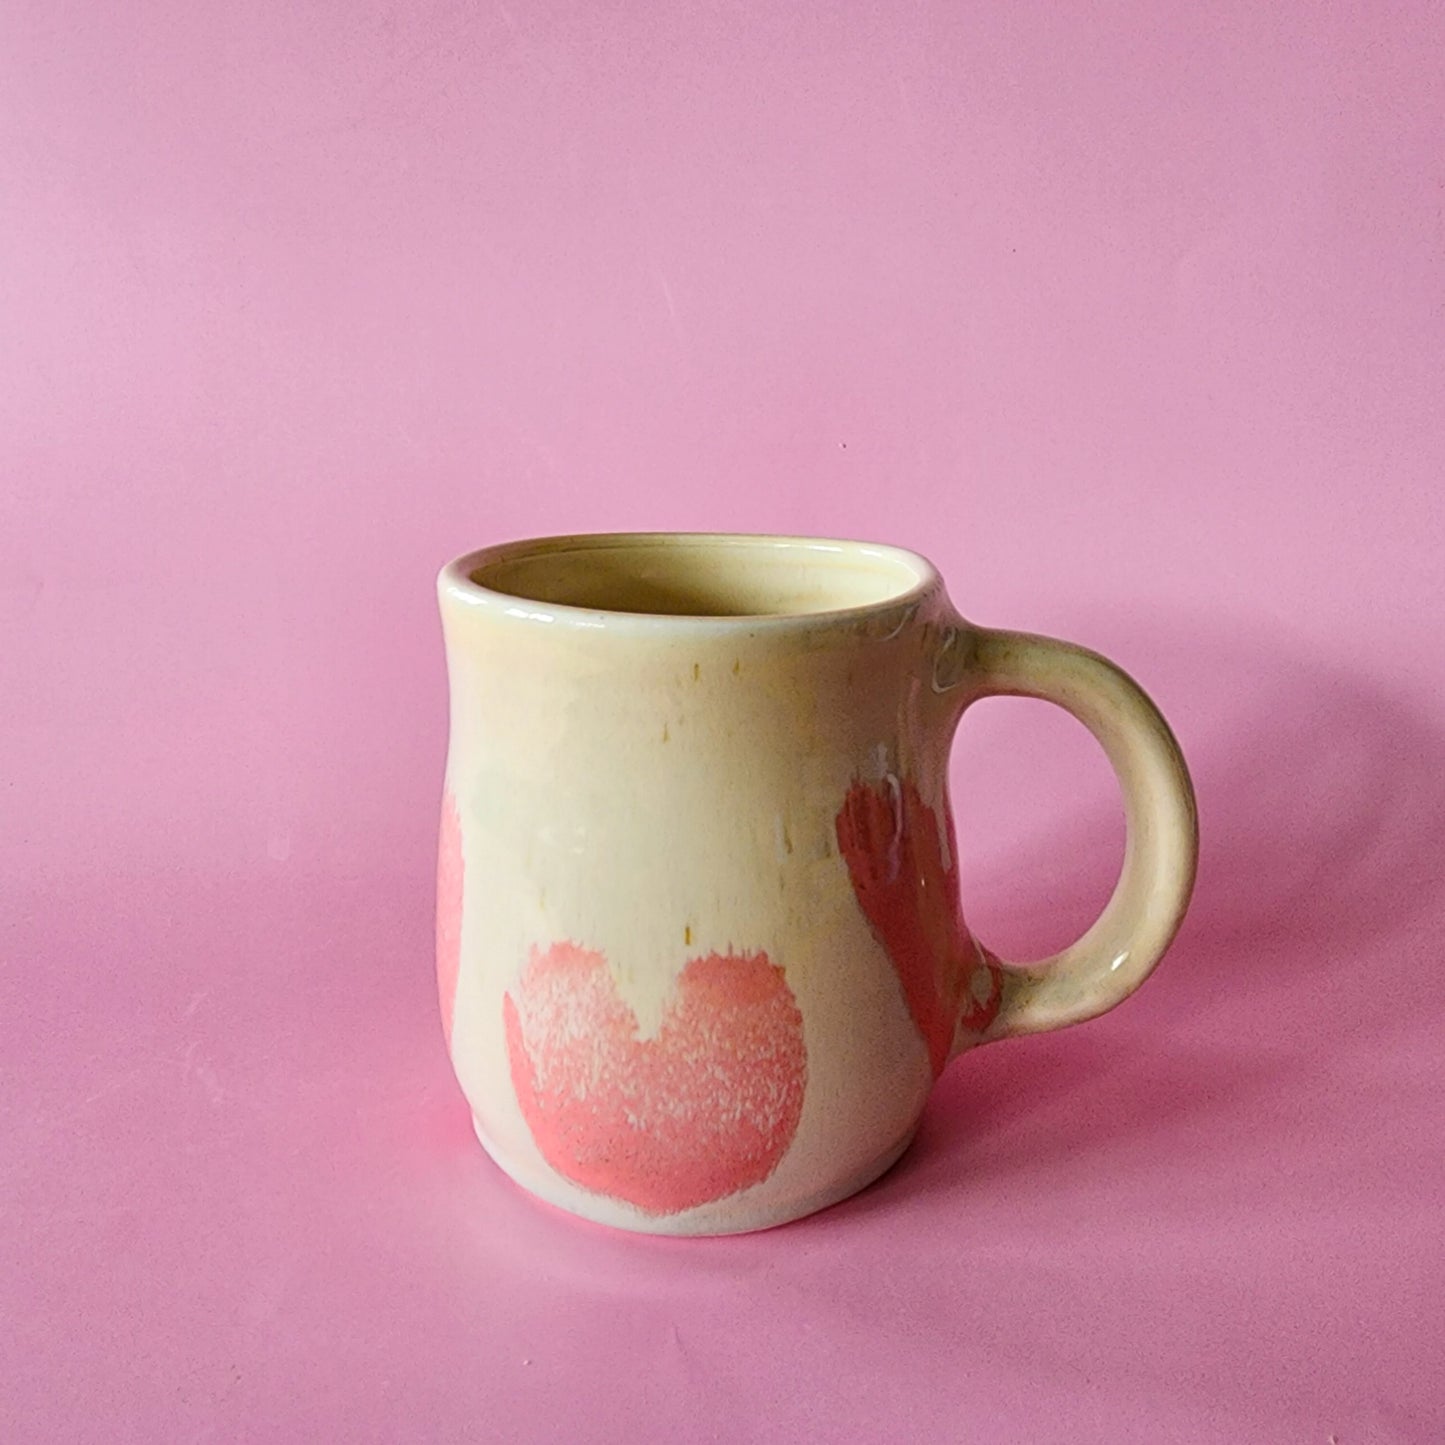 Drippy Heart Mug with caramilk glaze